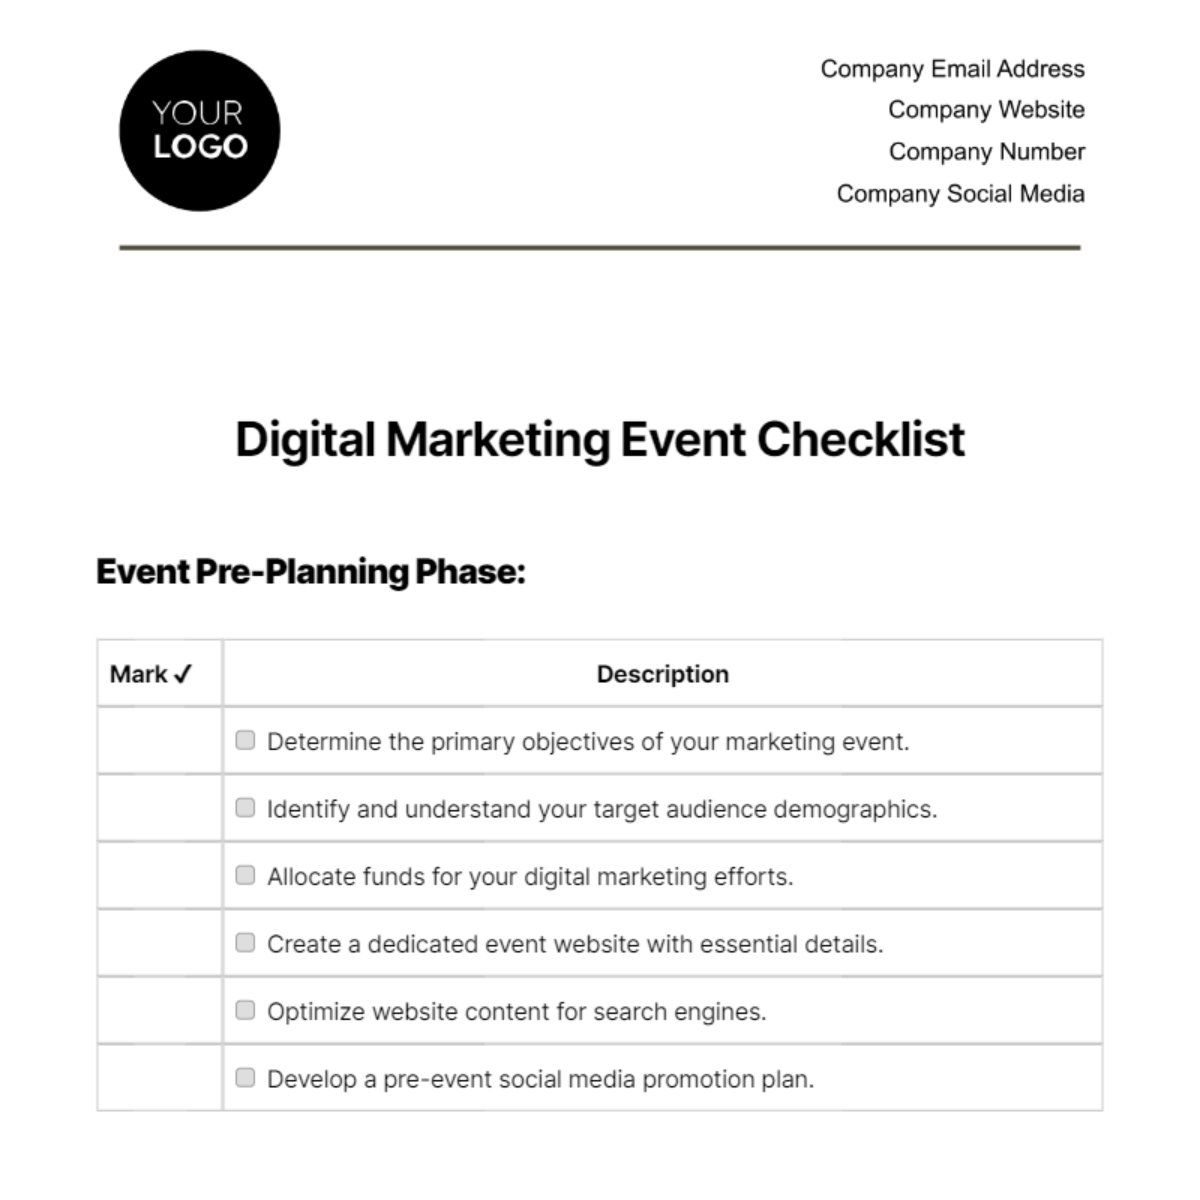 Digital Marketing Event Checklist Template